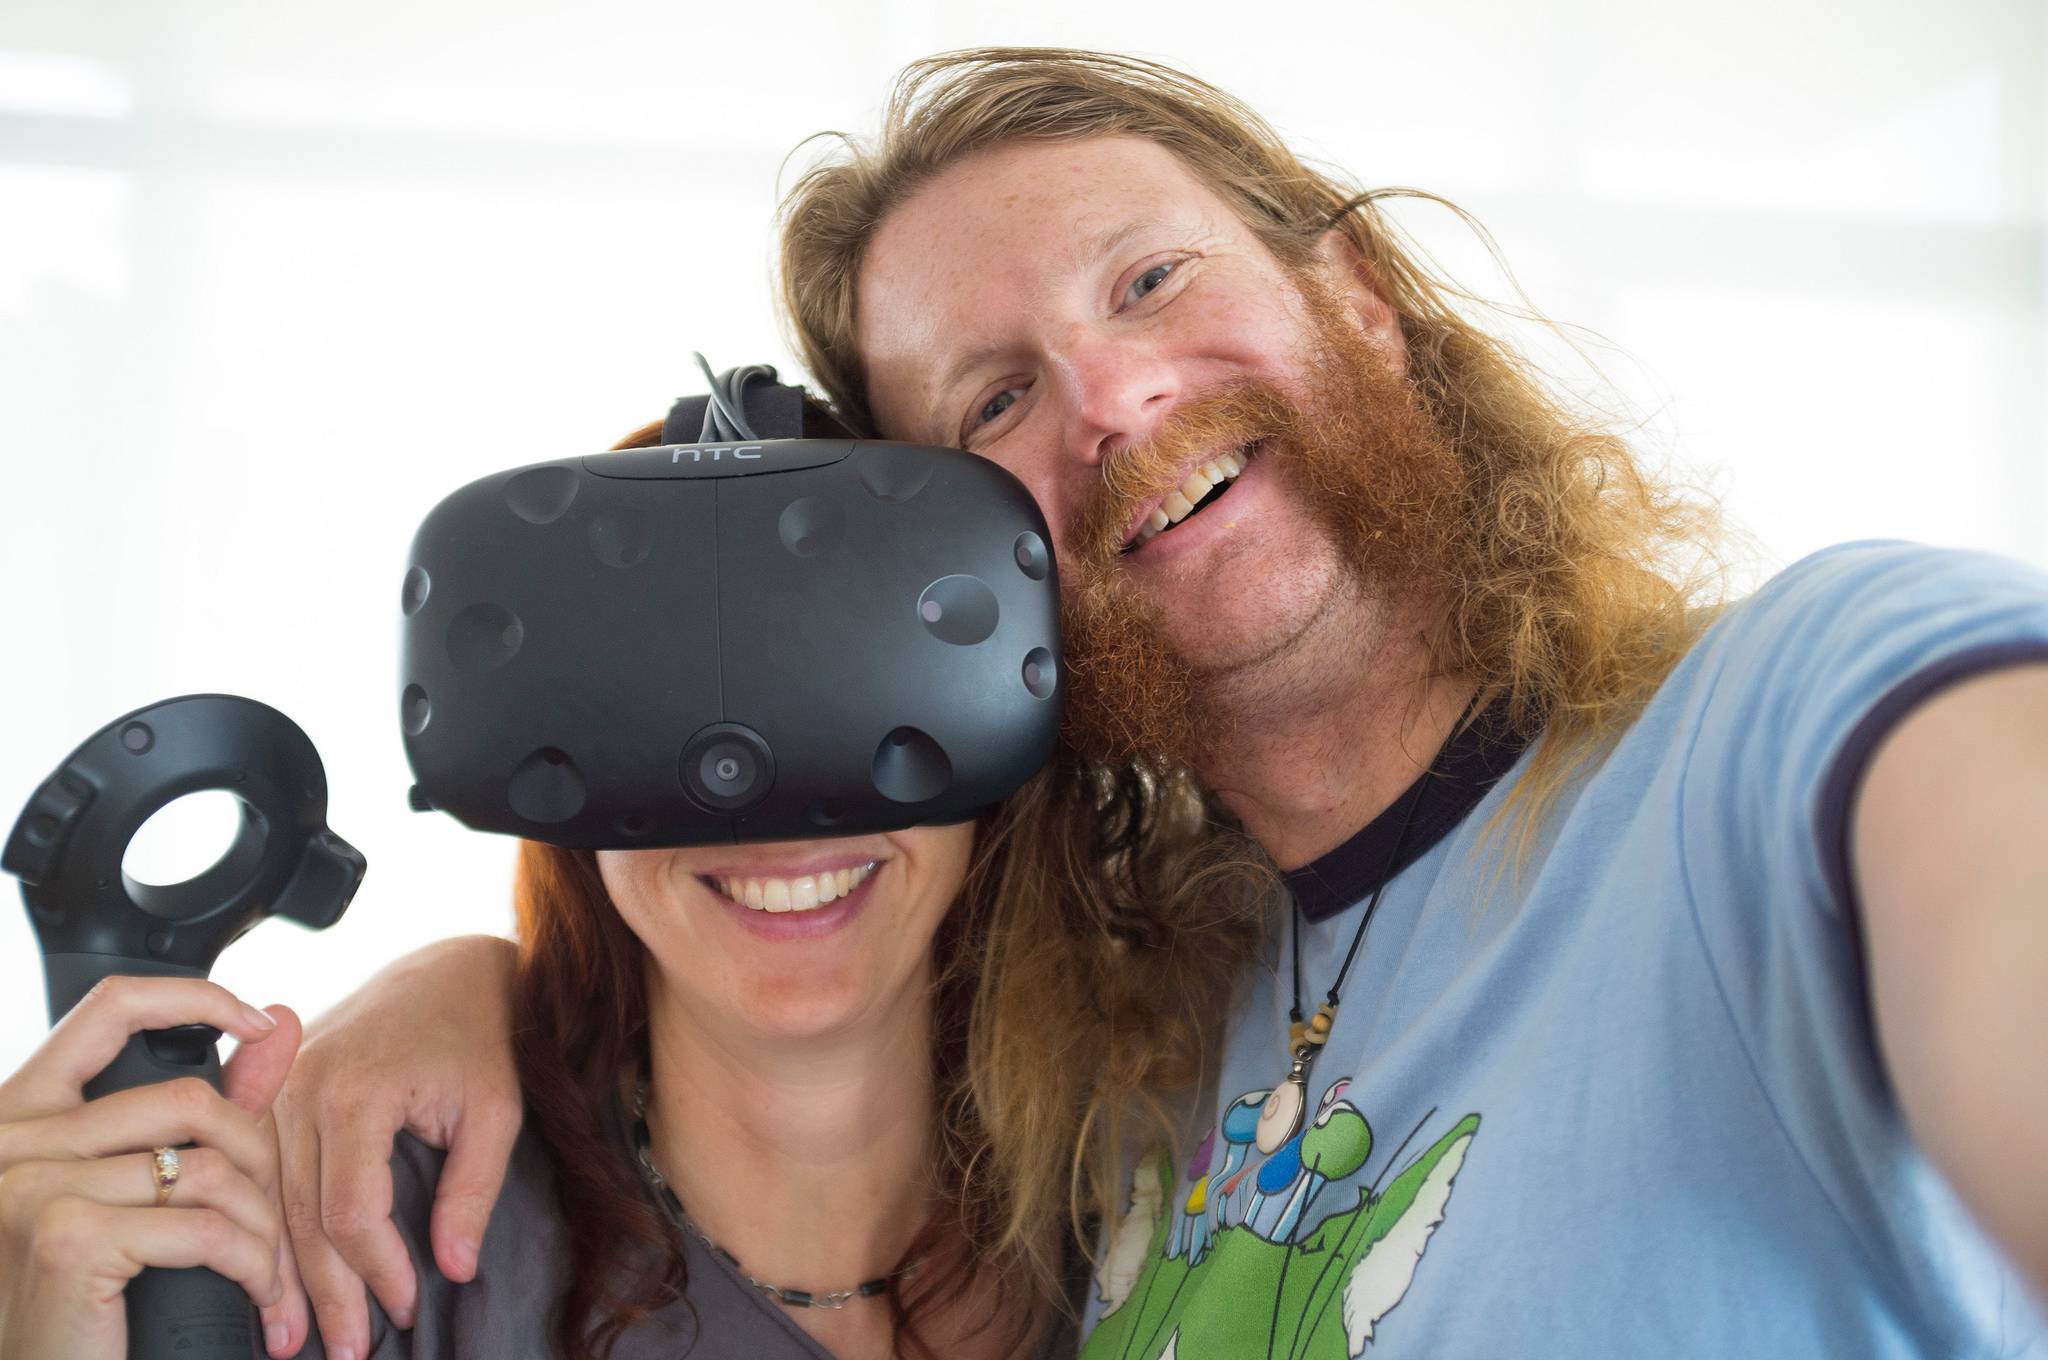 Facebook brings like-minded people together in VR Spaces